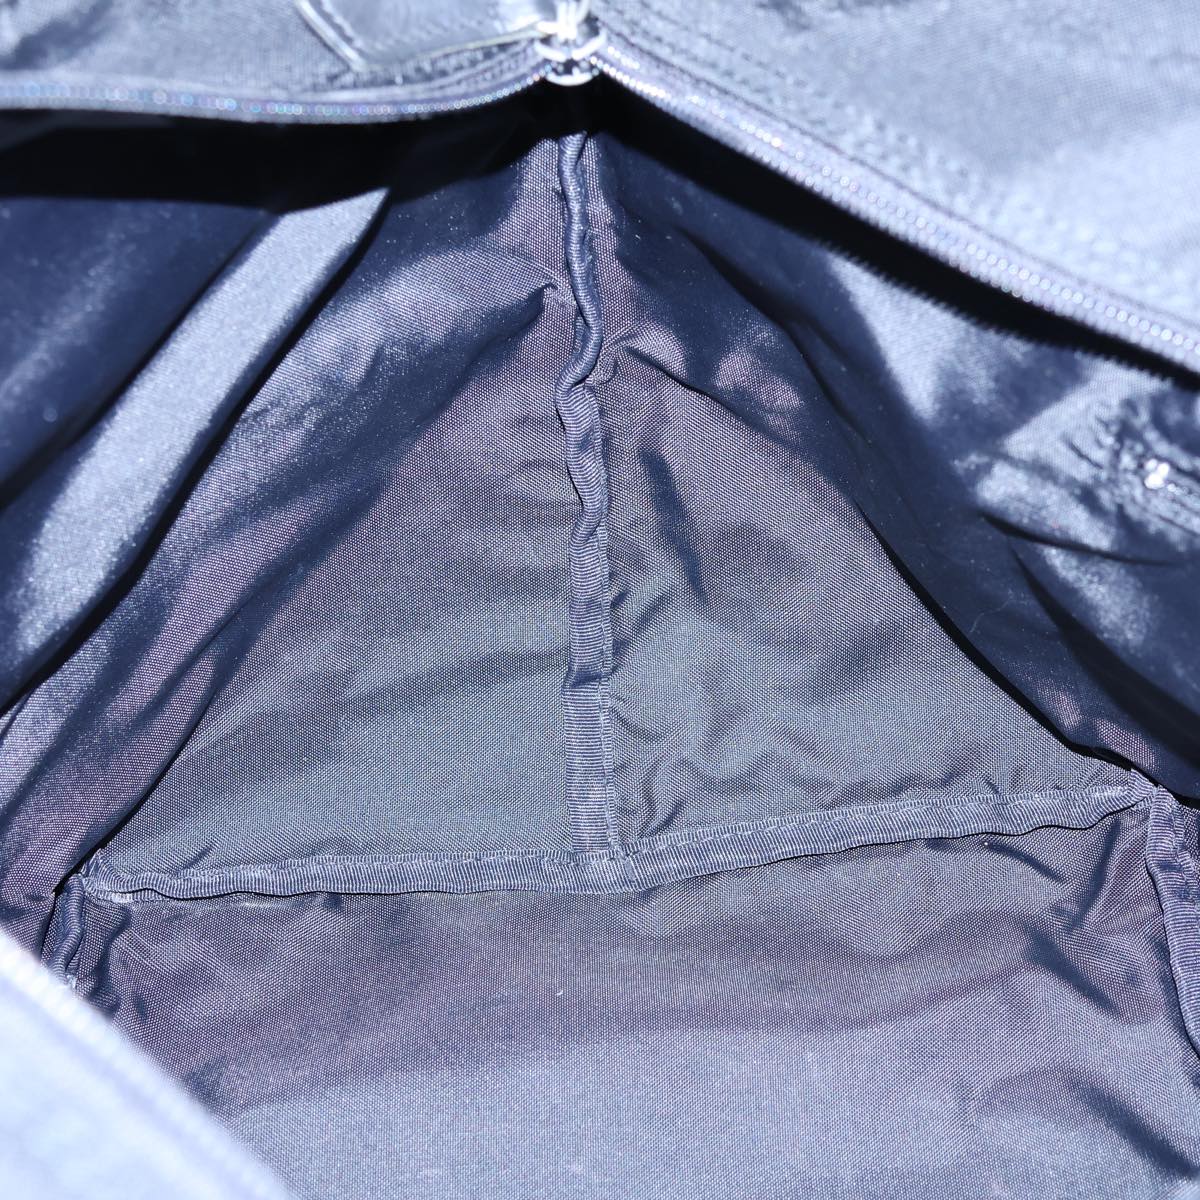 Burberrys Nova Check Blue Label Tote Bag Nylon Beige Black Auth bs13692